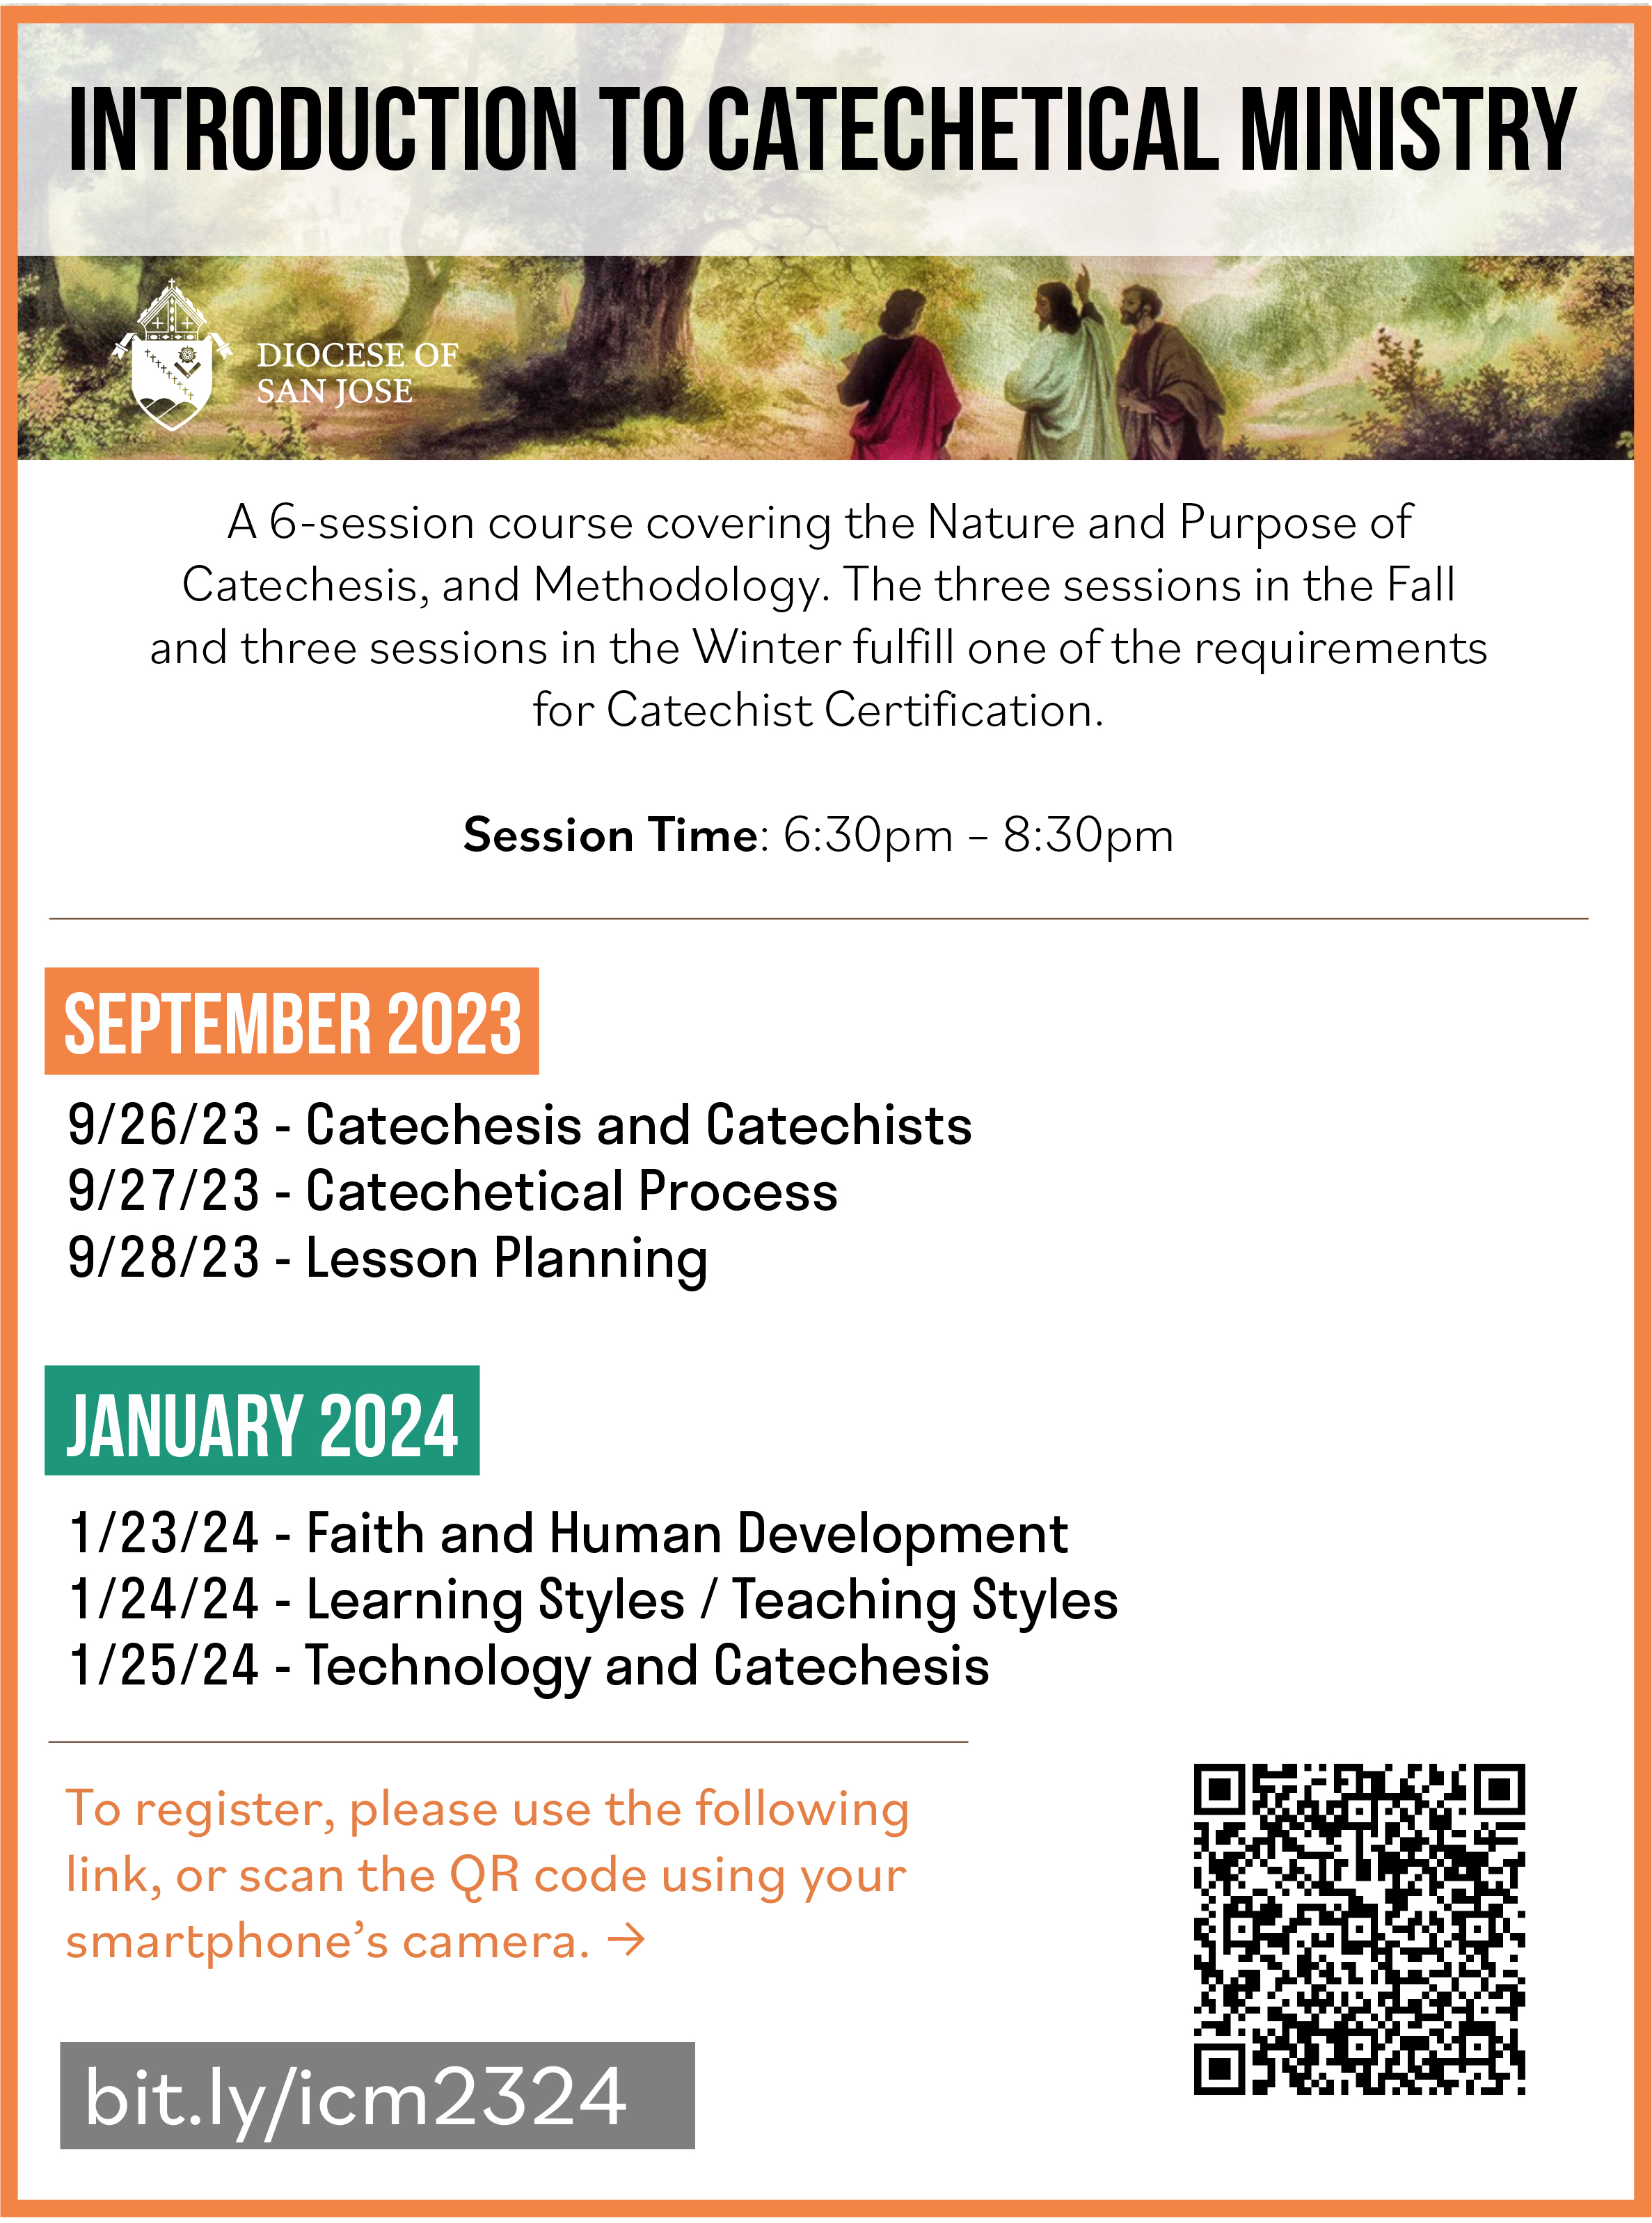 2023-2024 教理事工入門課程 Introduction to Catechetical Ministry Course